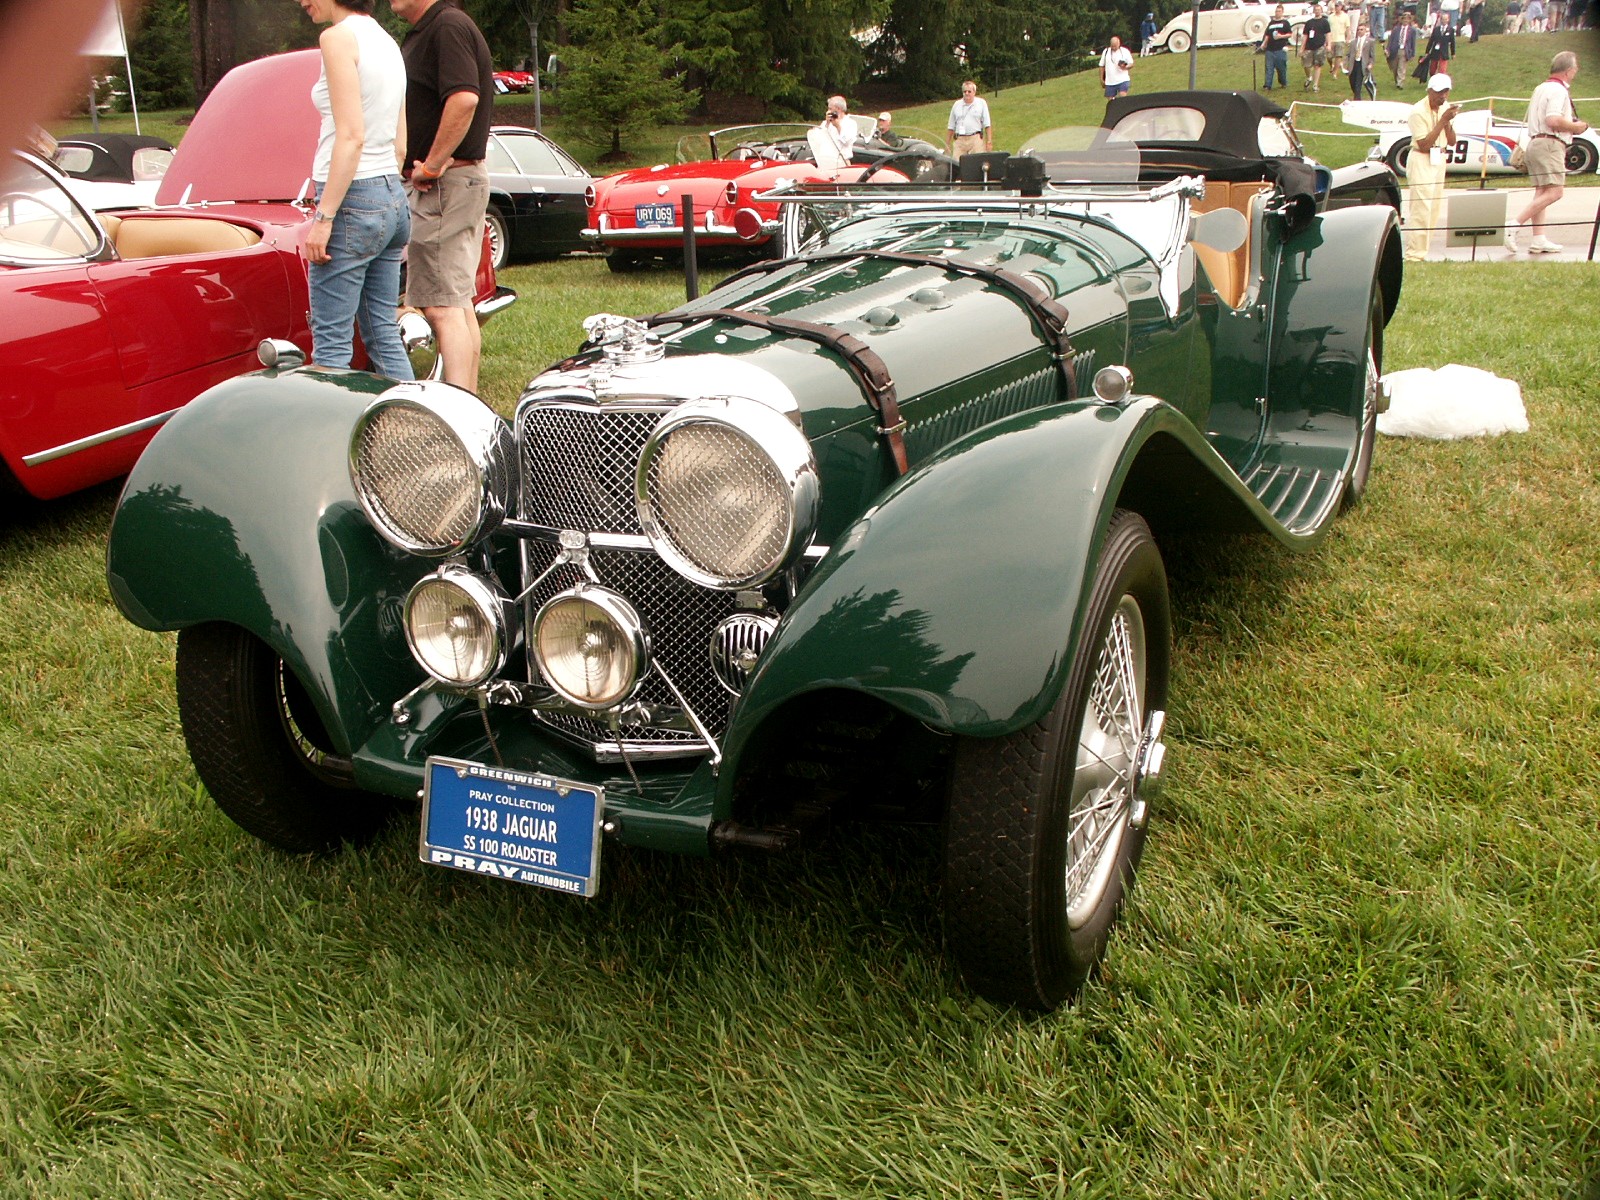 Jaguar SS 100